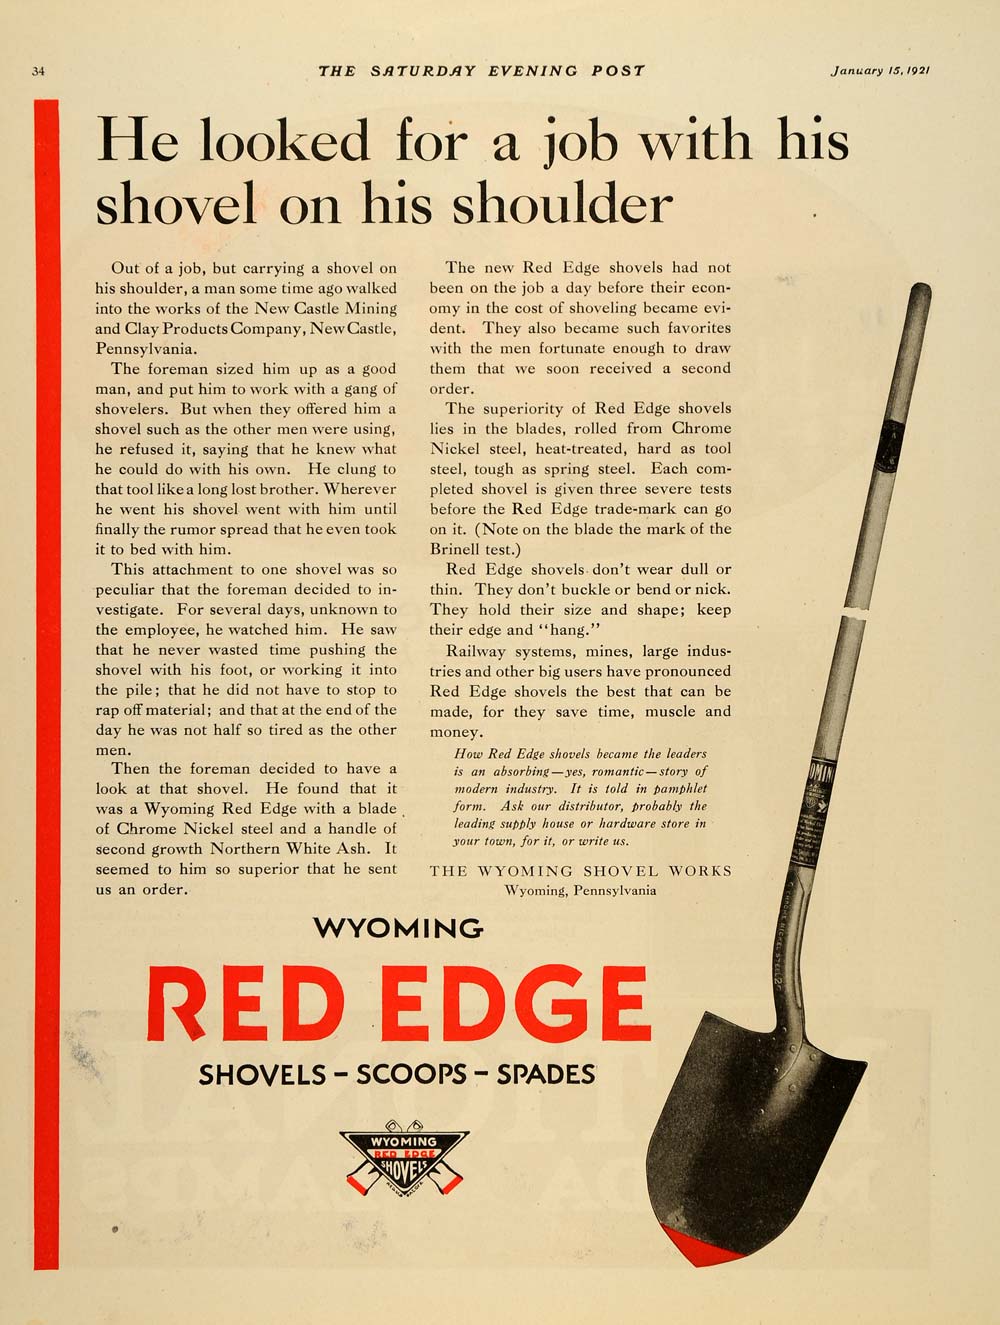 1921 Ad Wyoming Shovel Works Red Edge Scoops Spades - ORIGINAL ADVERTISING SEP3